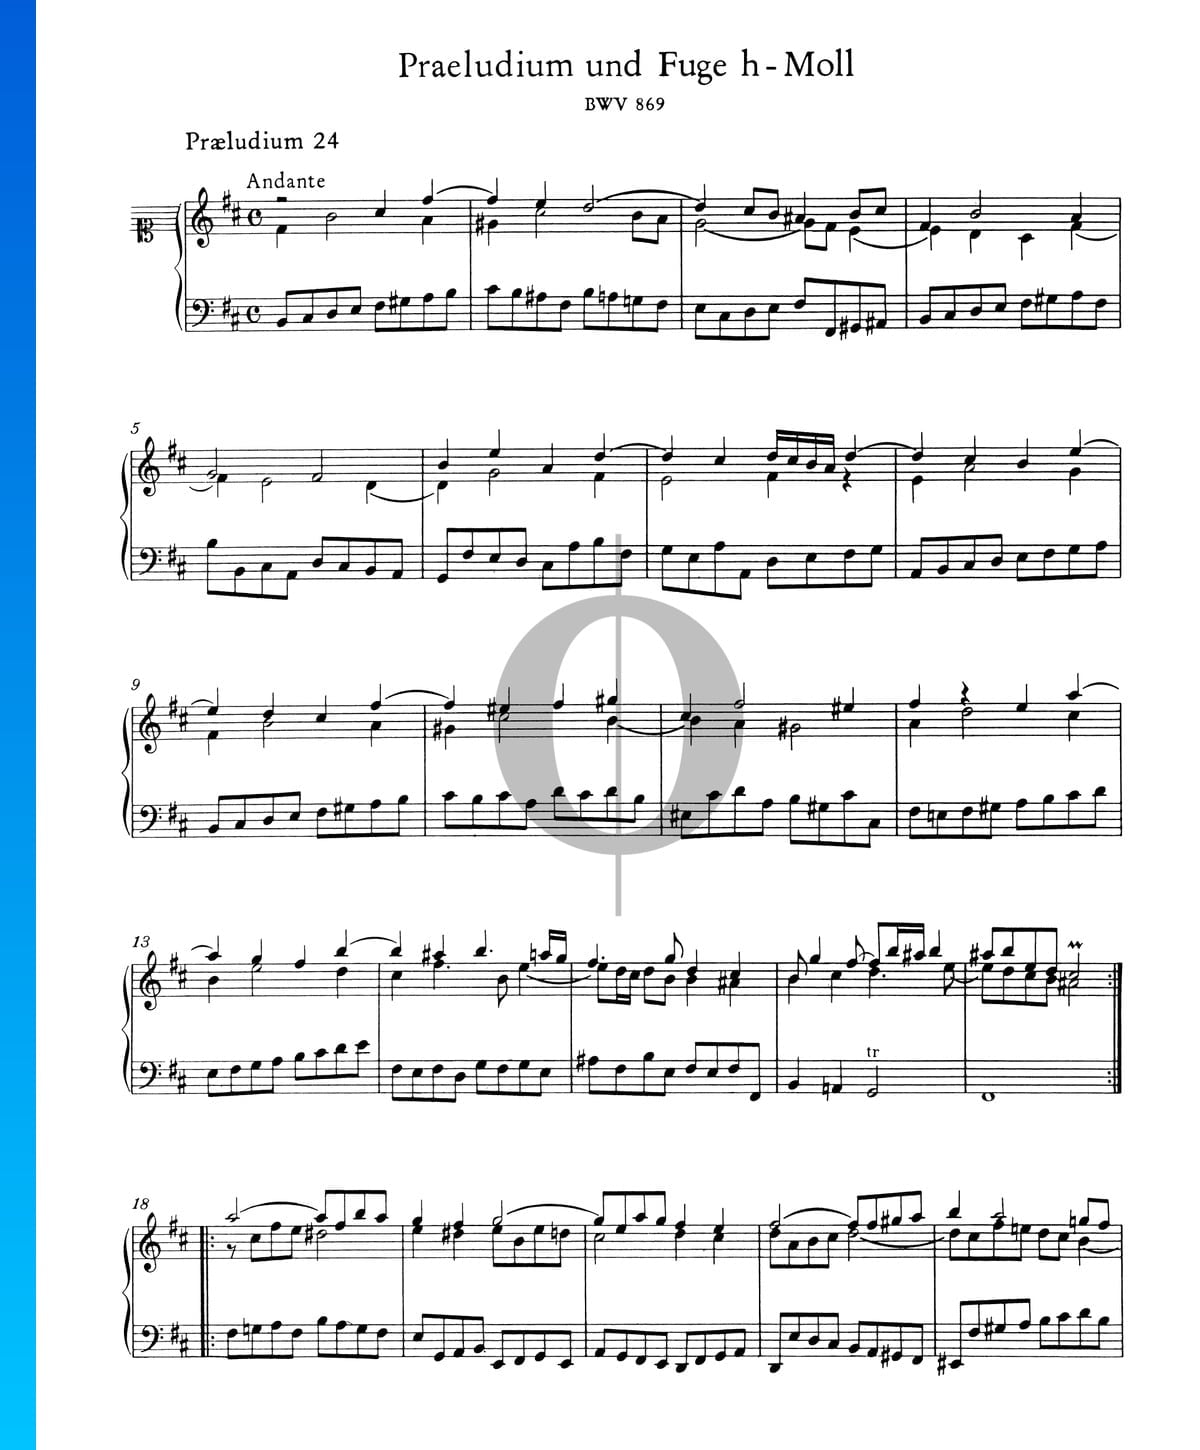 Prelude 24 B Minor, BWV 869 Sheet Music (Piano Solo) - OKTAV